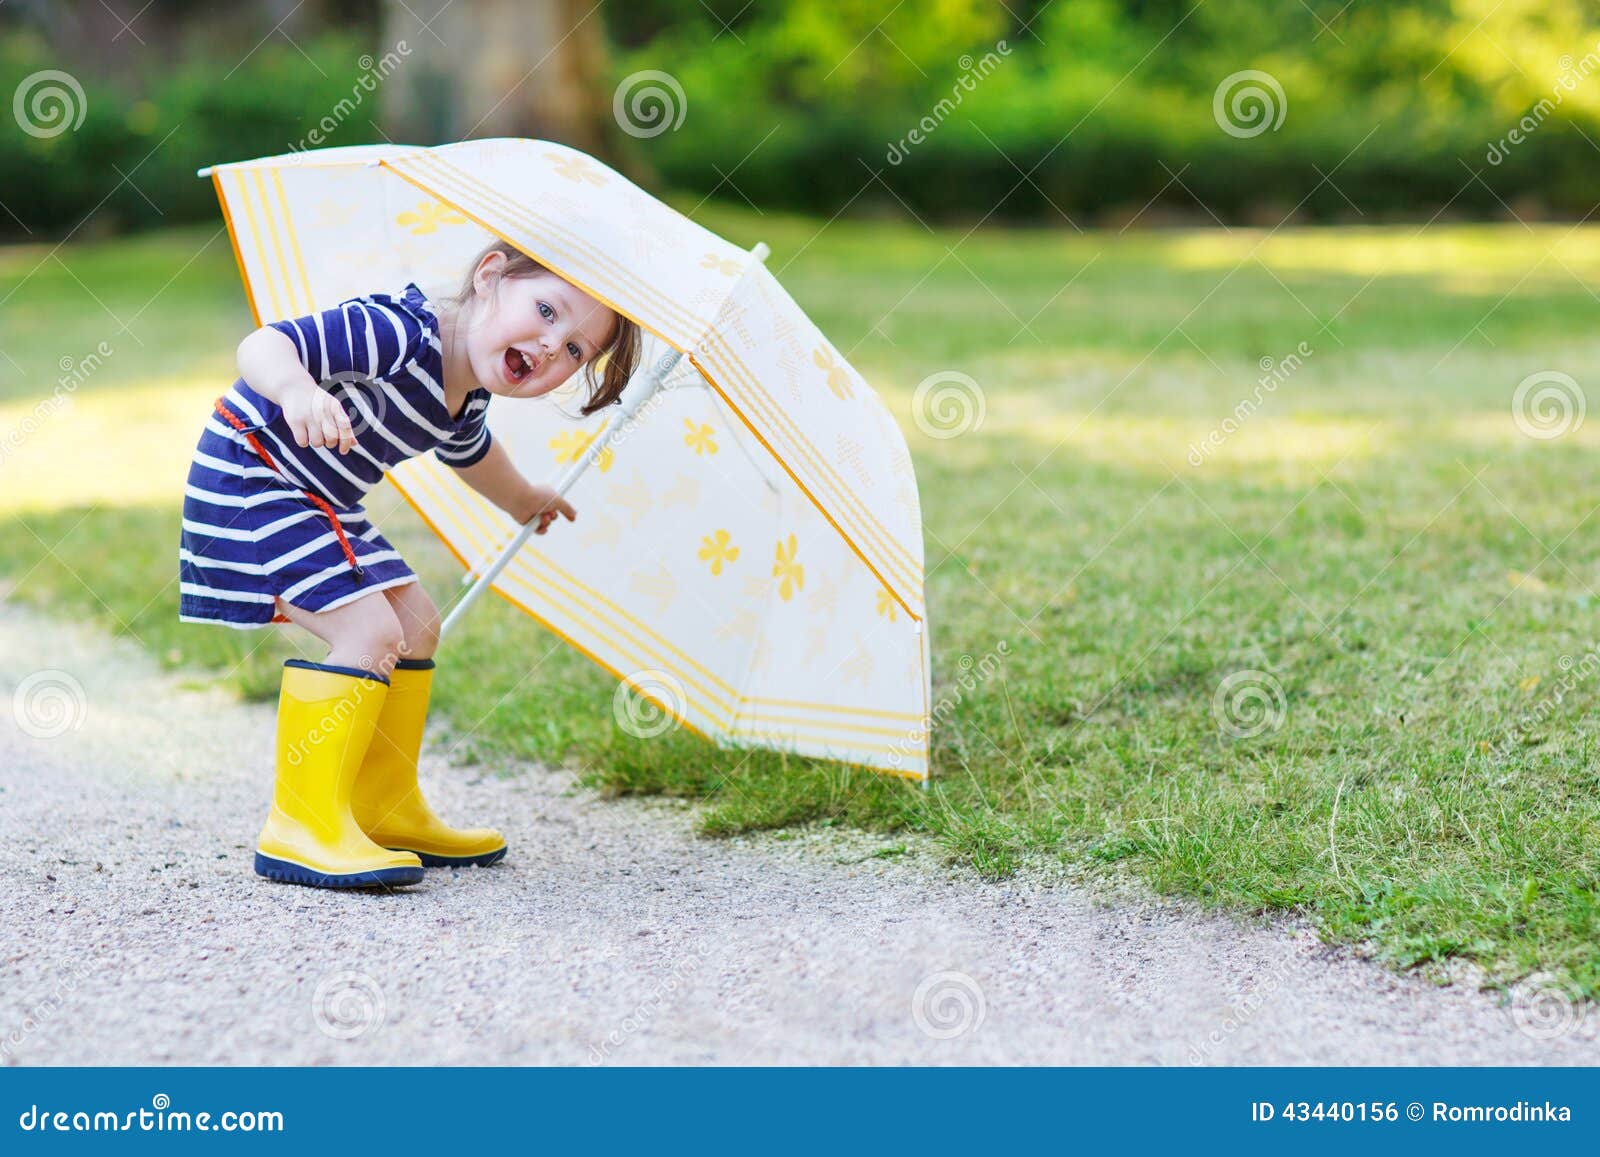 Toddler Girl Rain Boots And Umbrella | vlr.eng.br